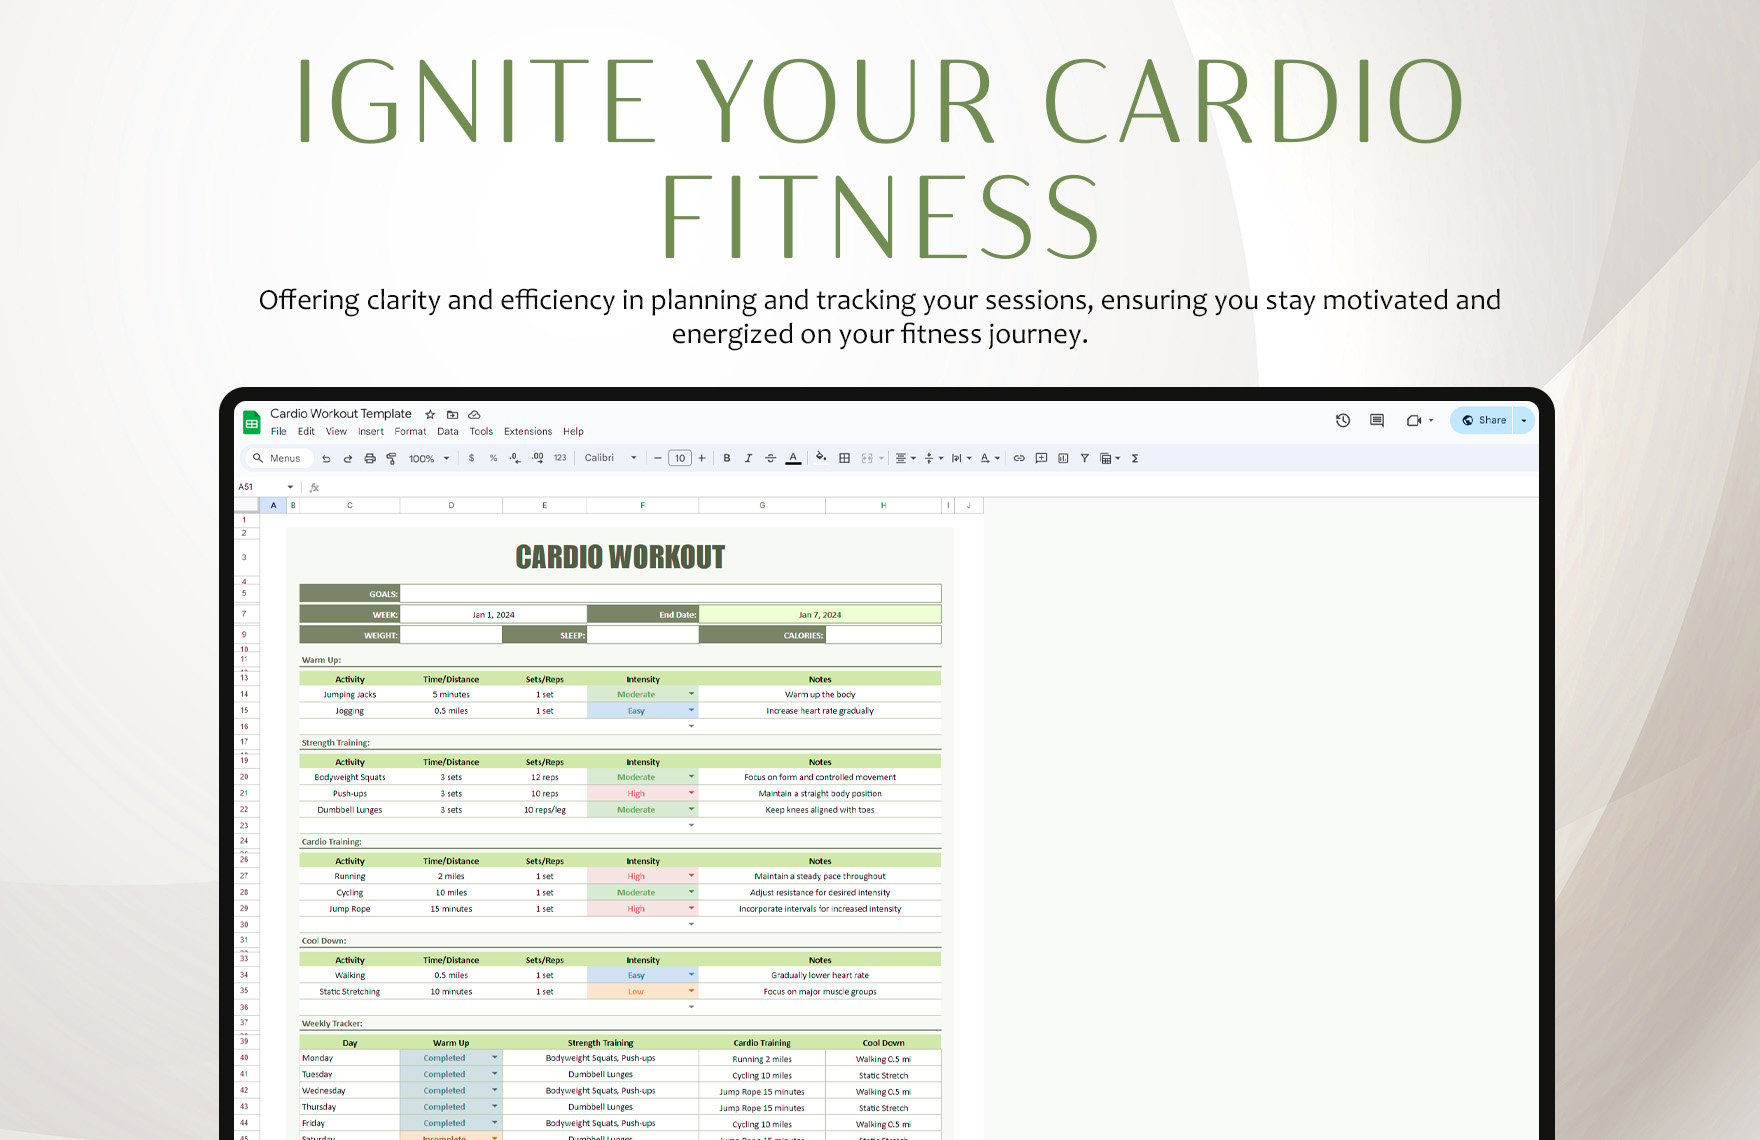 Cardio Workout Template